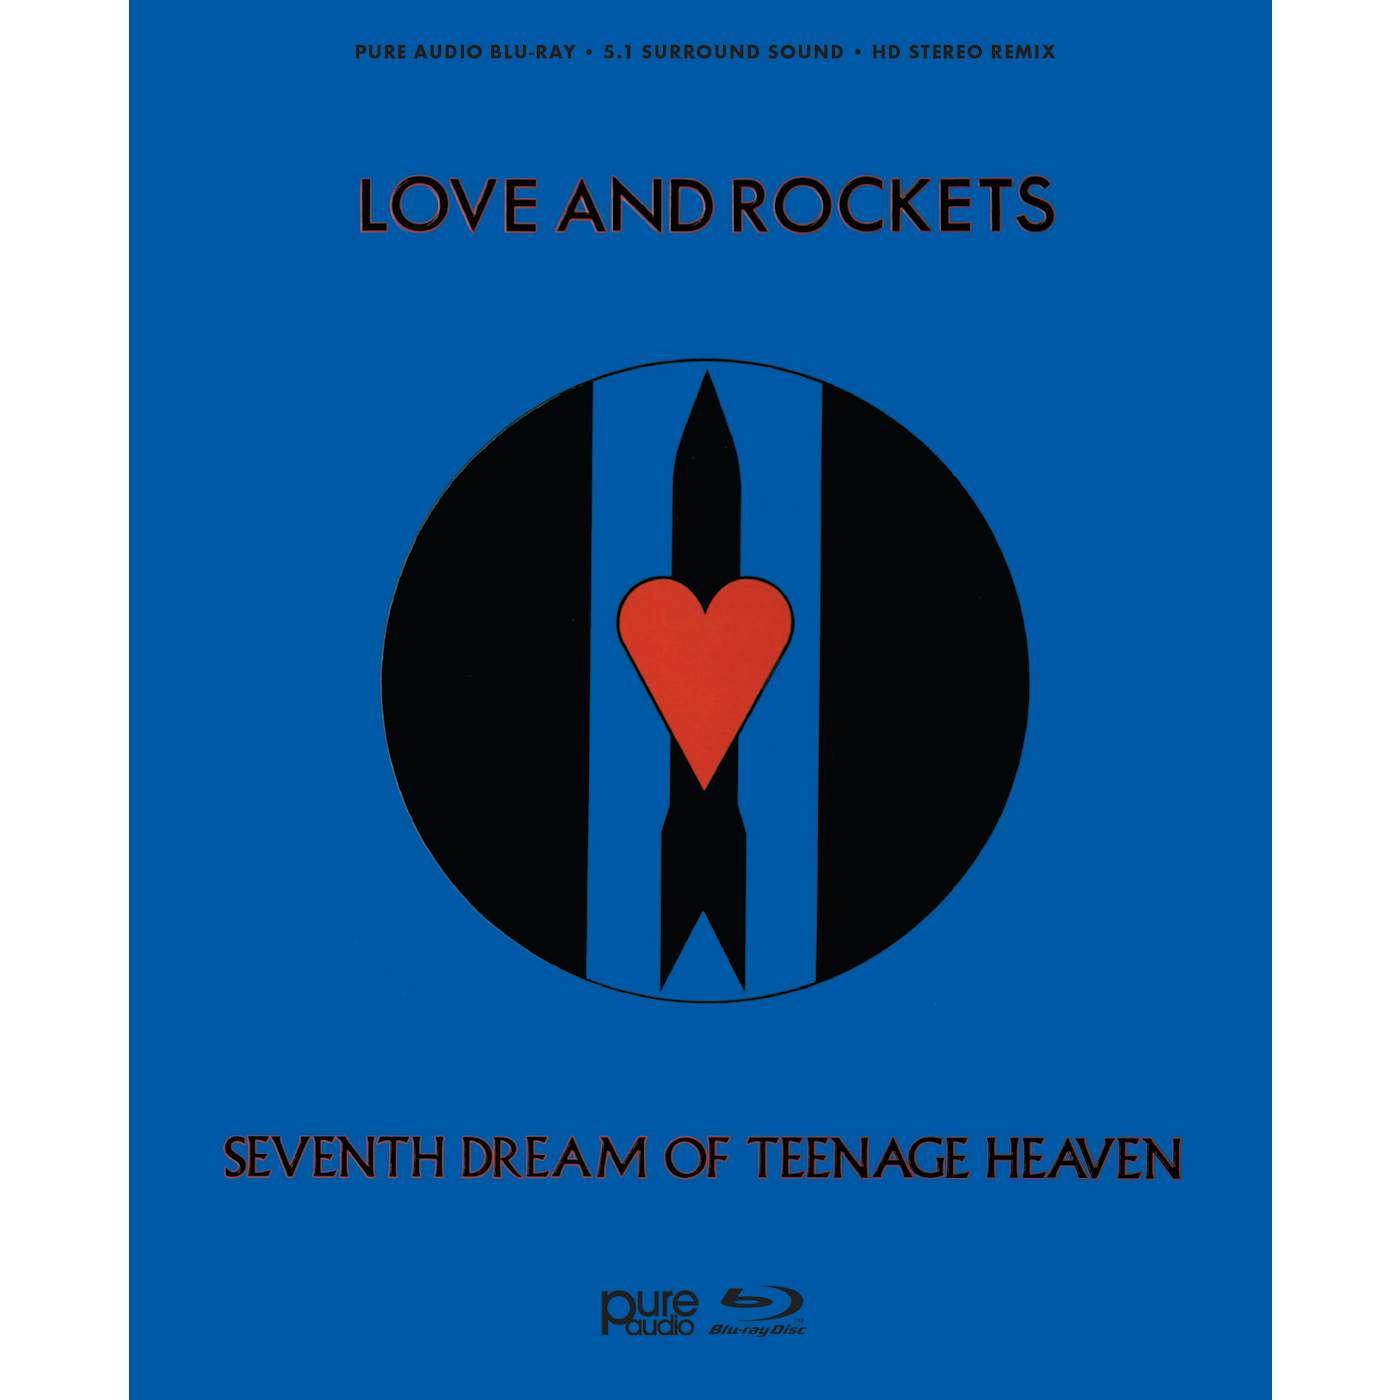 Love and Rockets SEVENTH DREAM OF TEENAGE HEAVEN Blu-ray